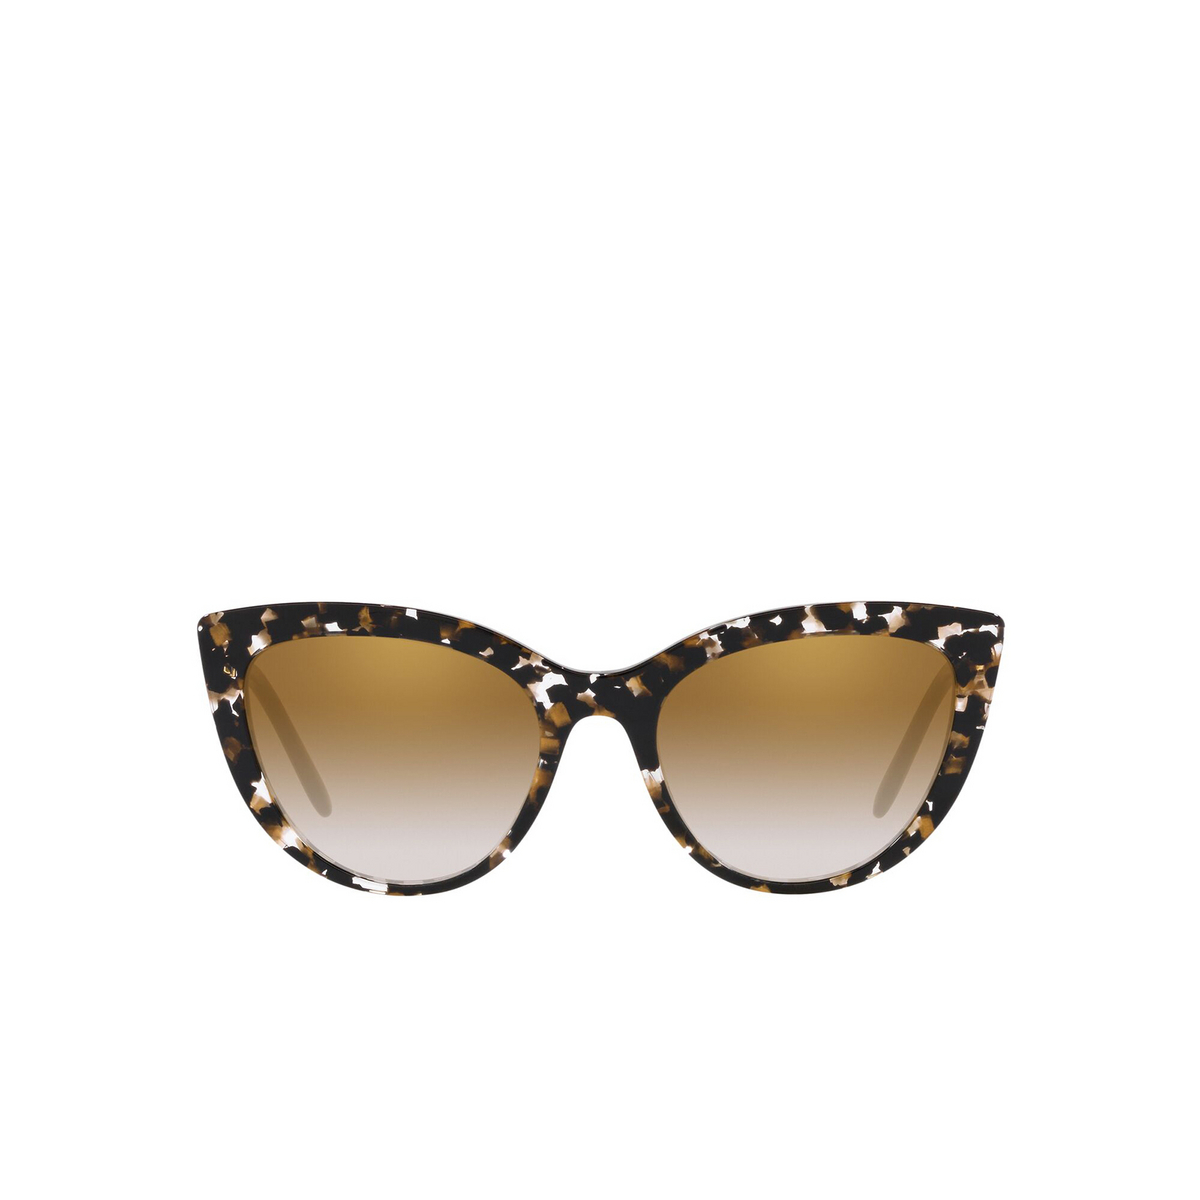 Dolce & Gabbana® Butterfly Sunglasses: DG4408 color Cube Black / Gold 911/6E - front view.